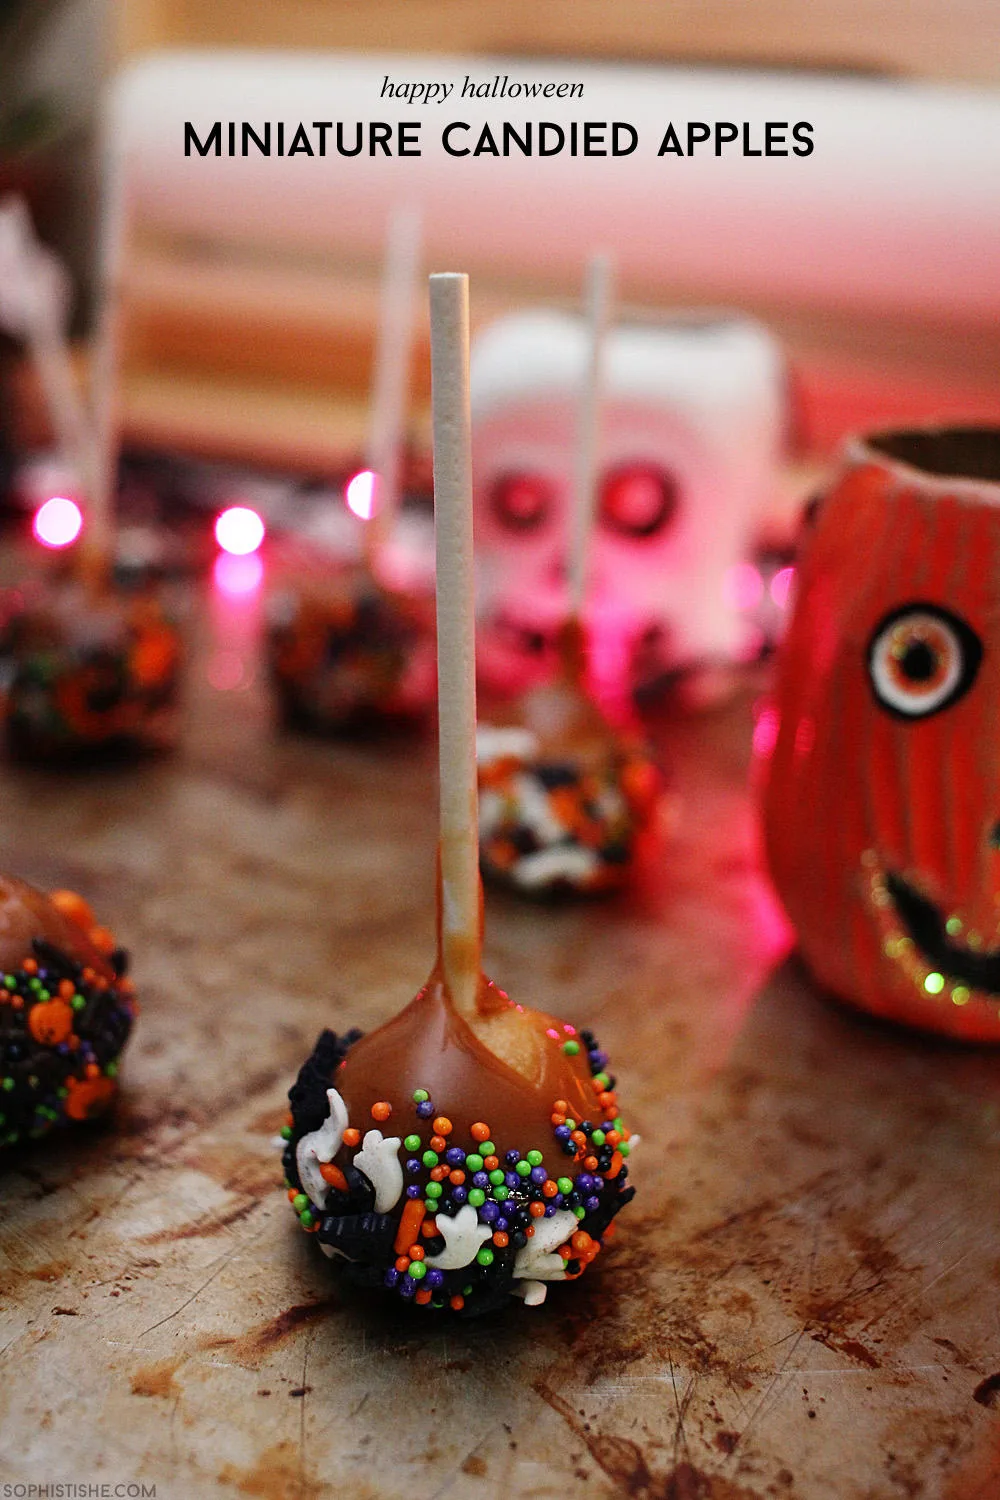 Miniature Candied Apples for Halloween via @sheenatatum